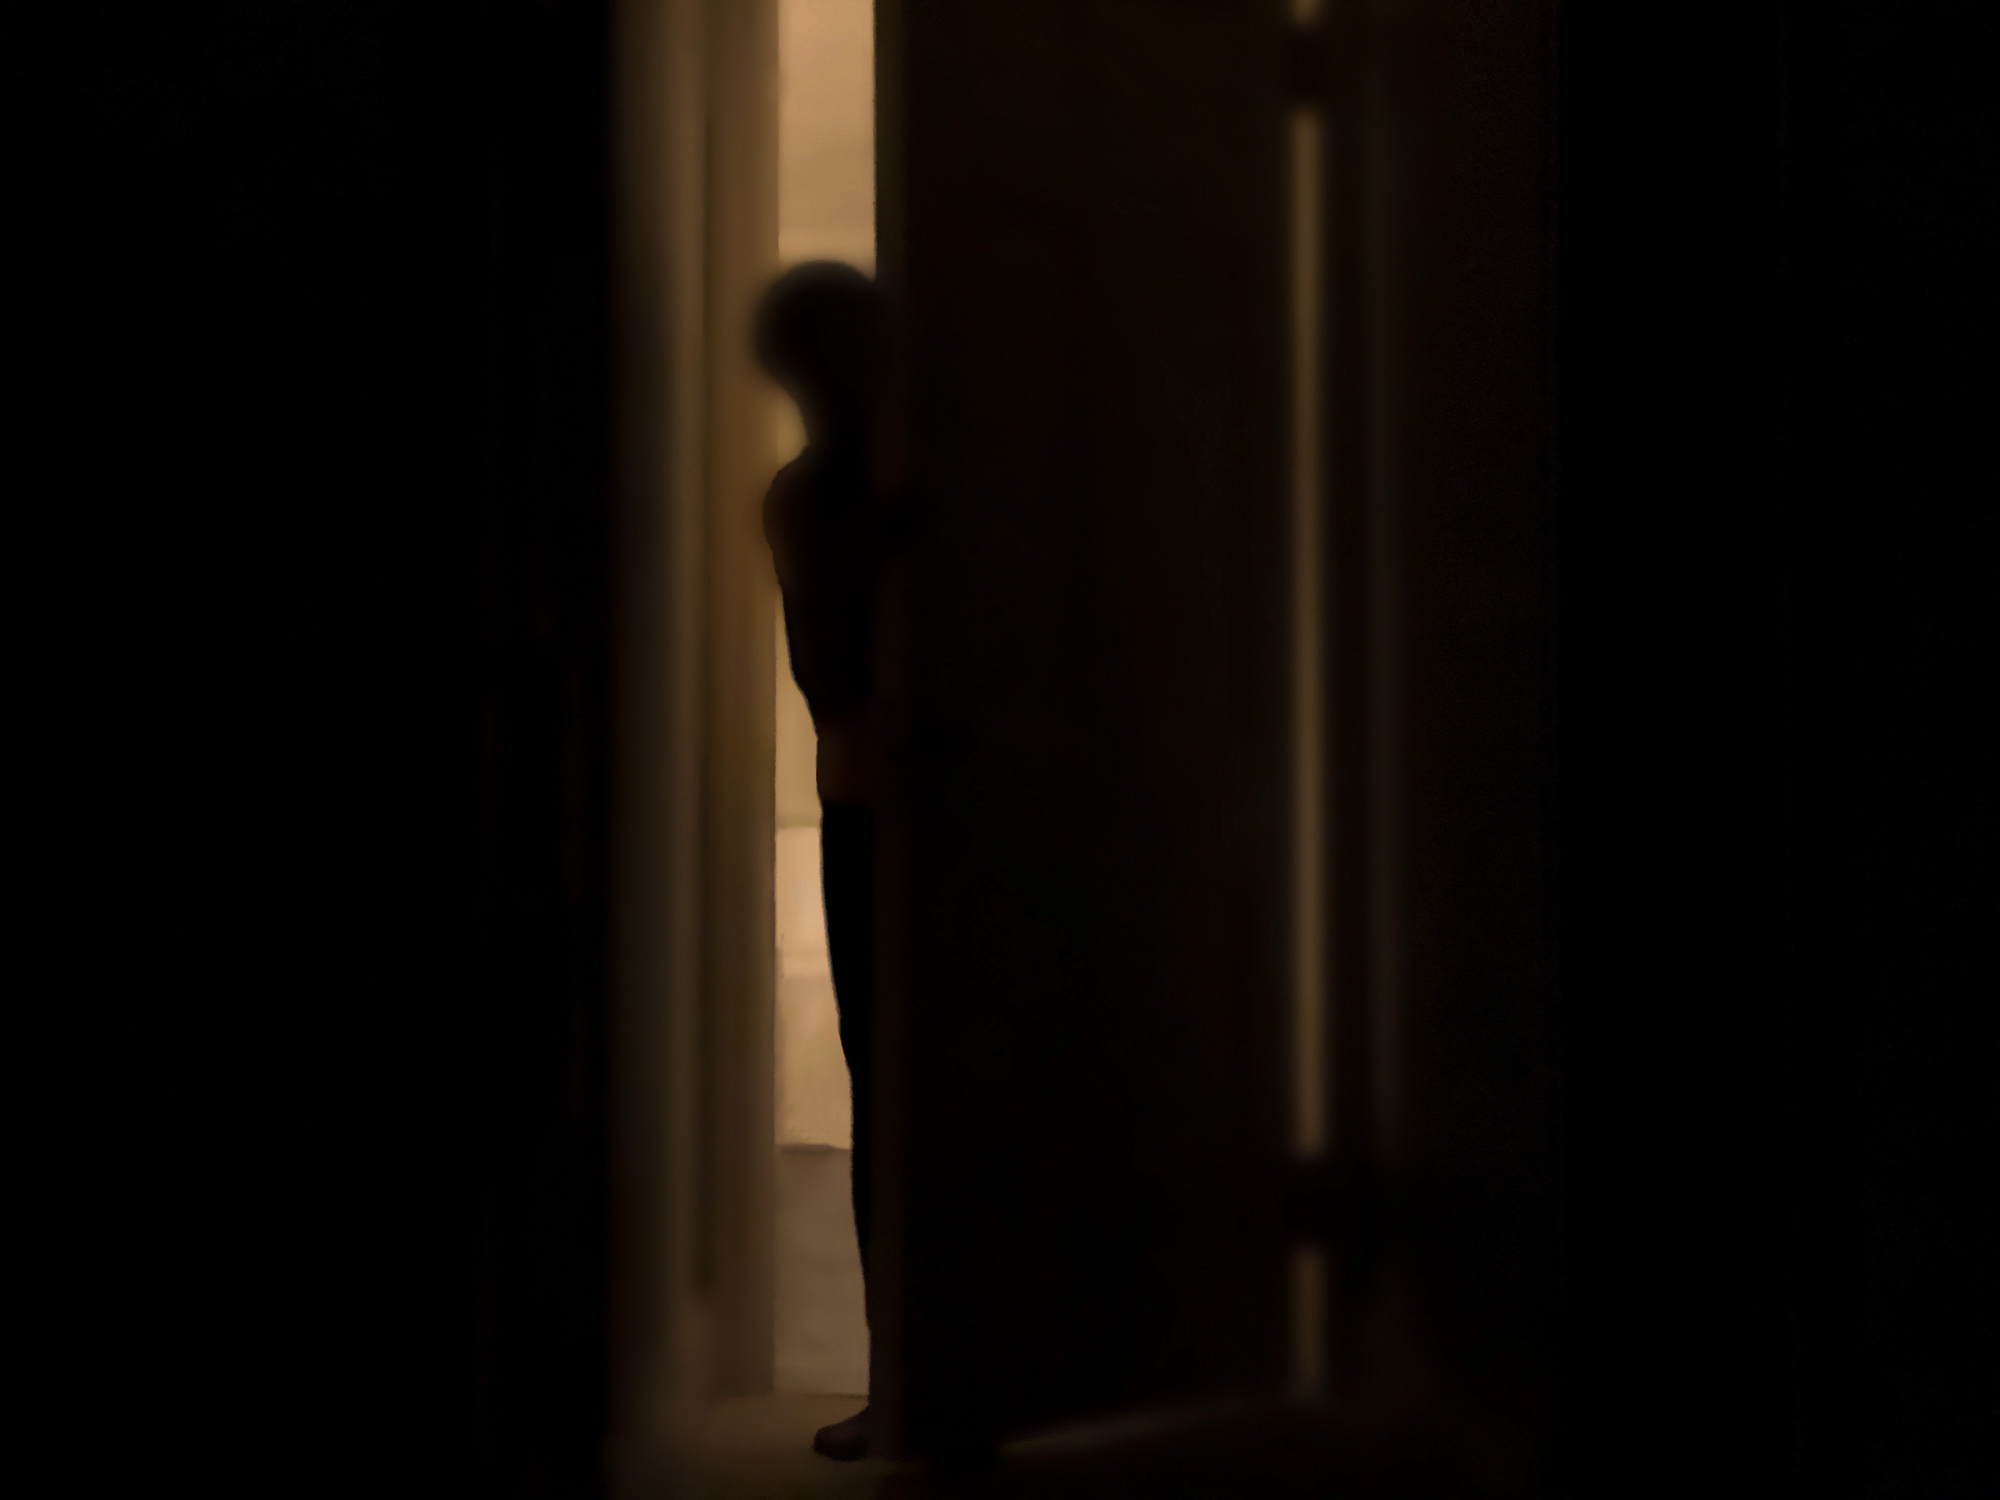 Silhouette of a person peeking into a dark room